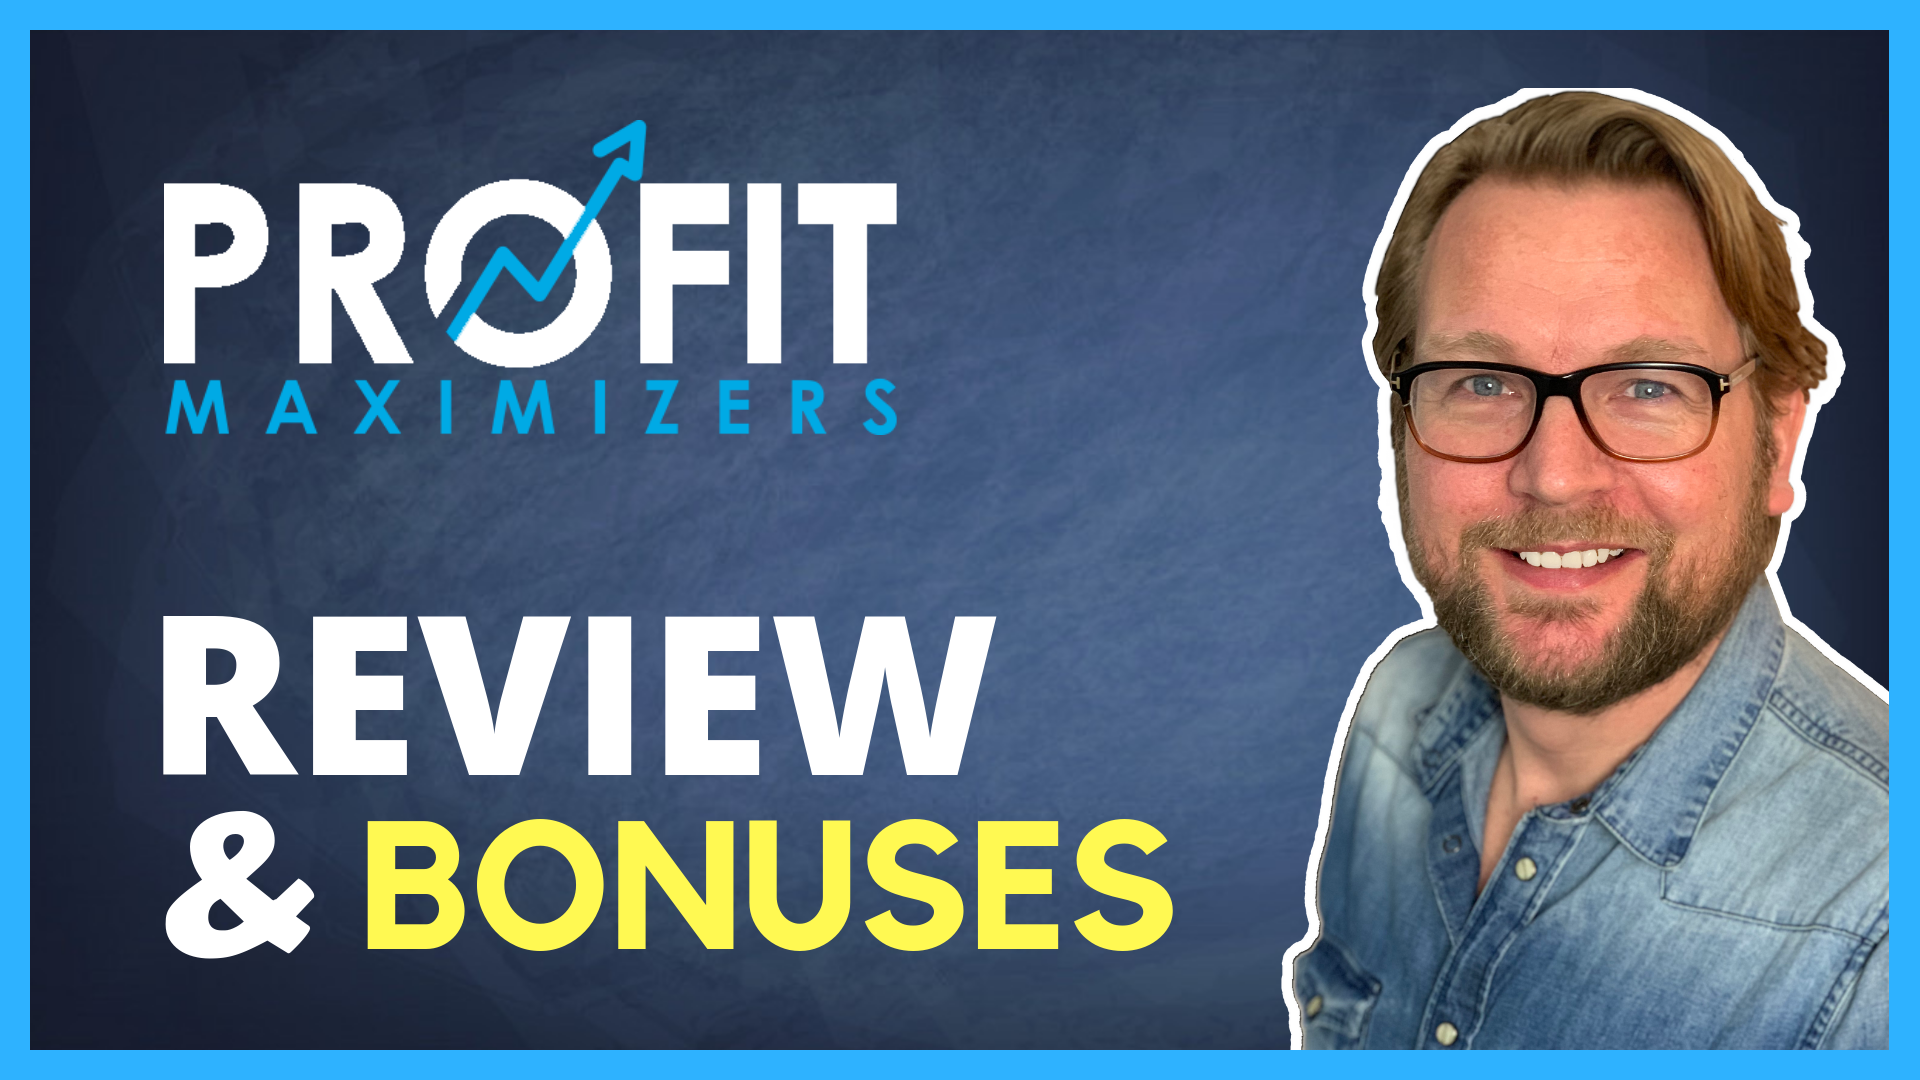 Profit Maximizers Review And Bonuses - Tim Verdouw